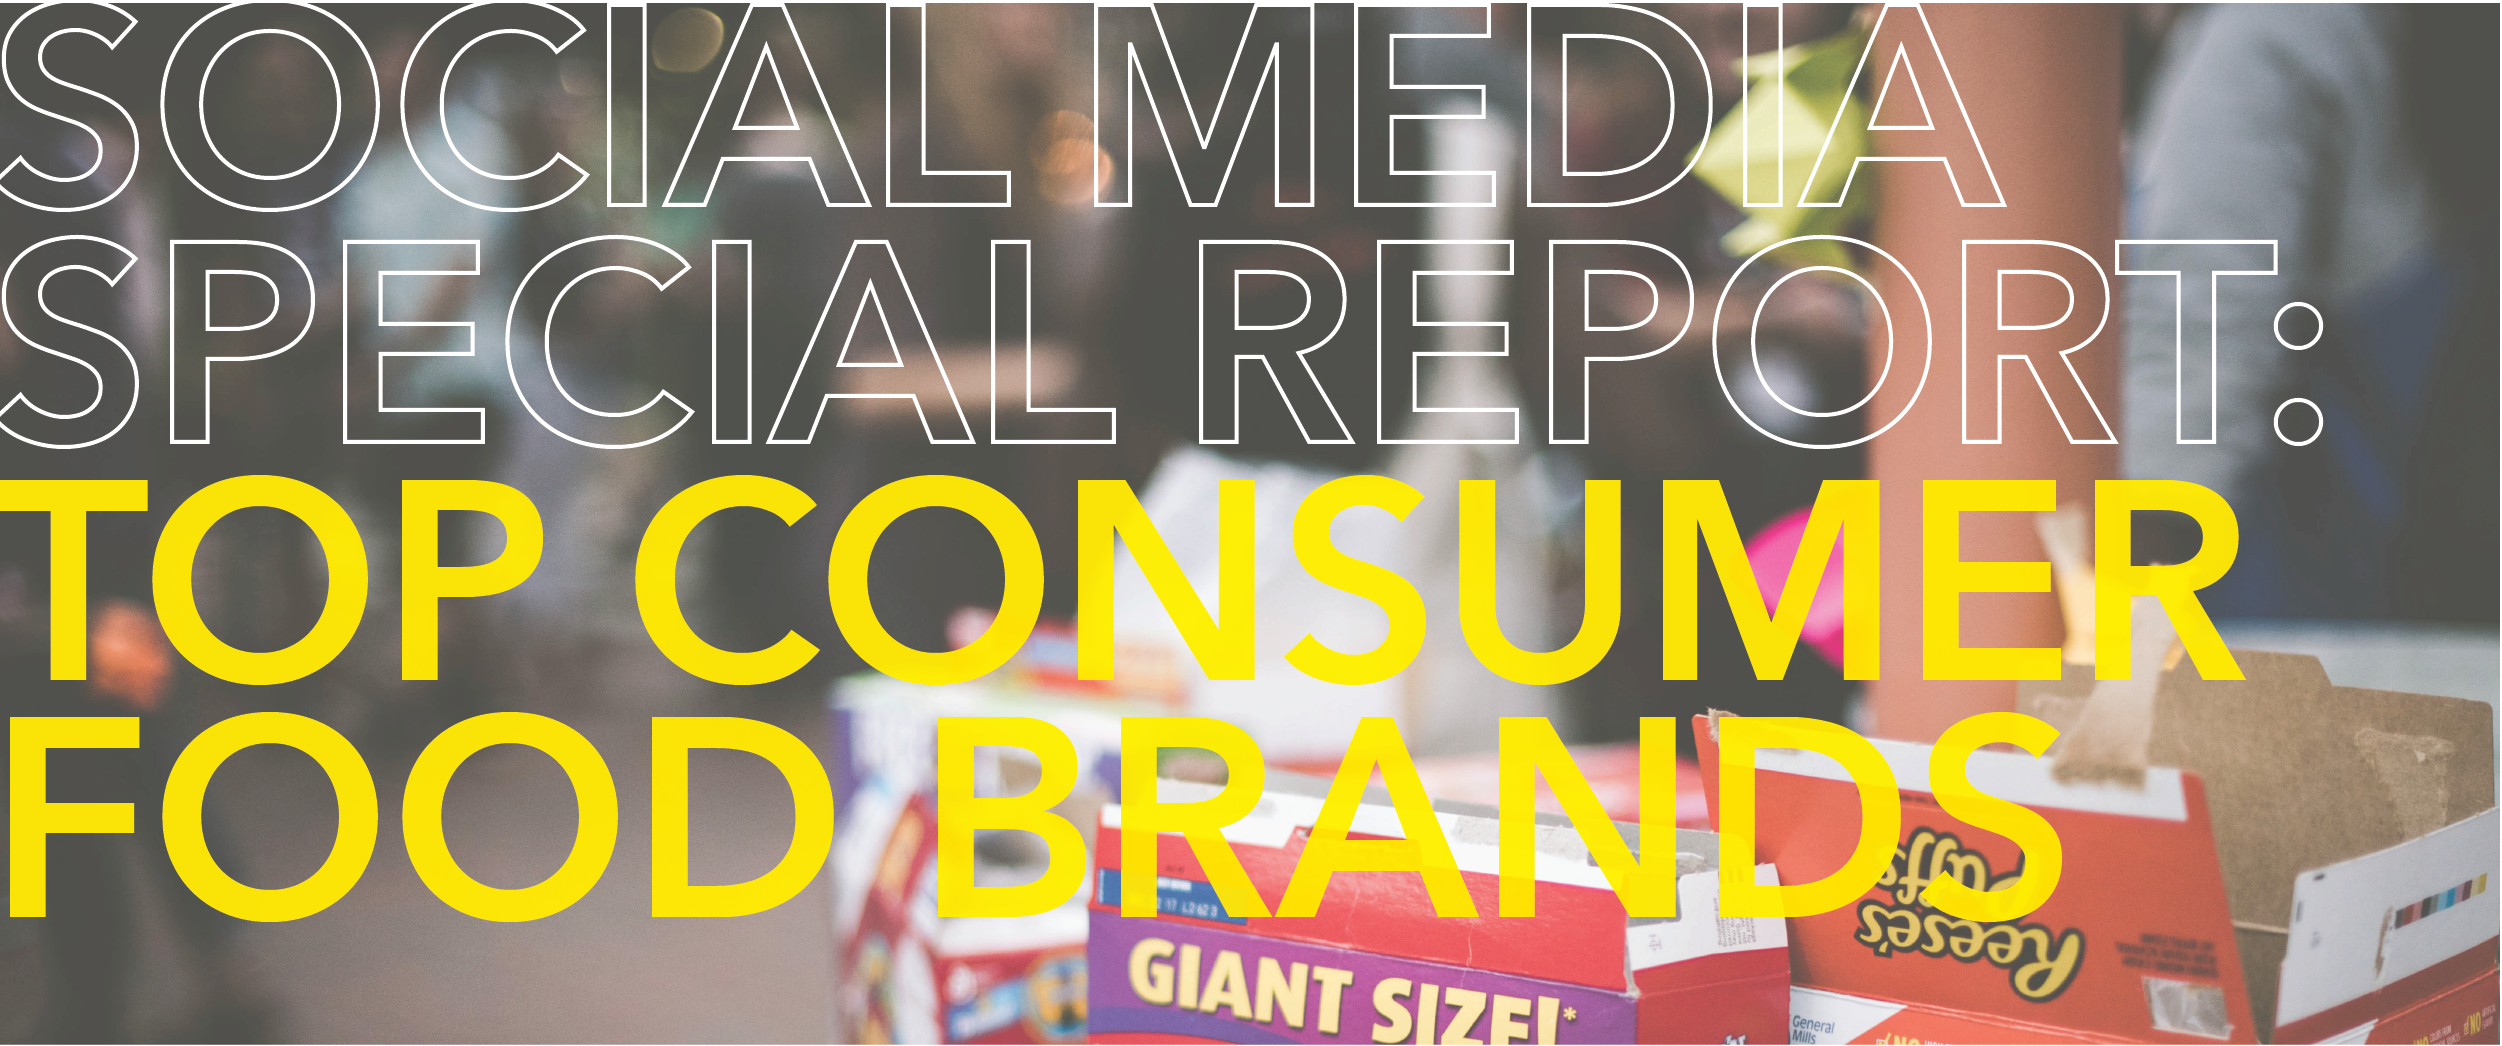 Social Media Special Report Top Consumer Food Brands